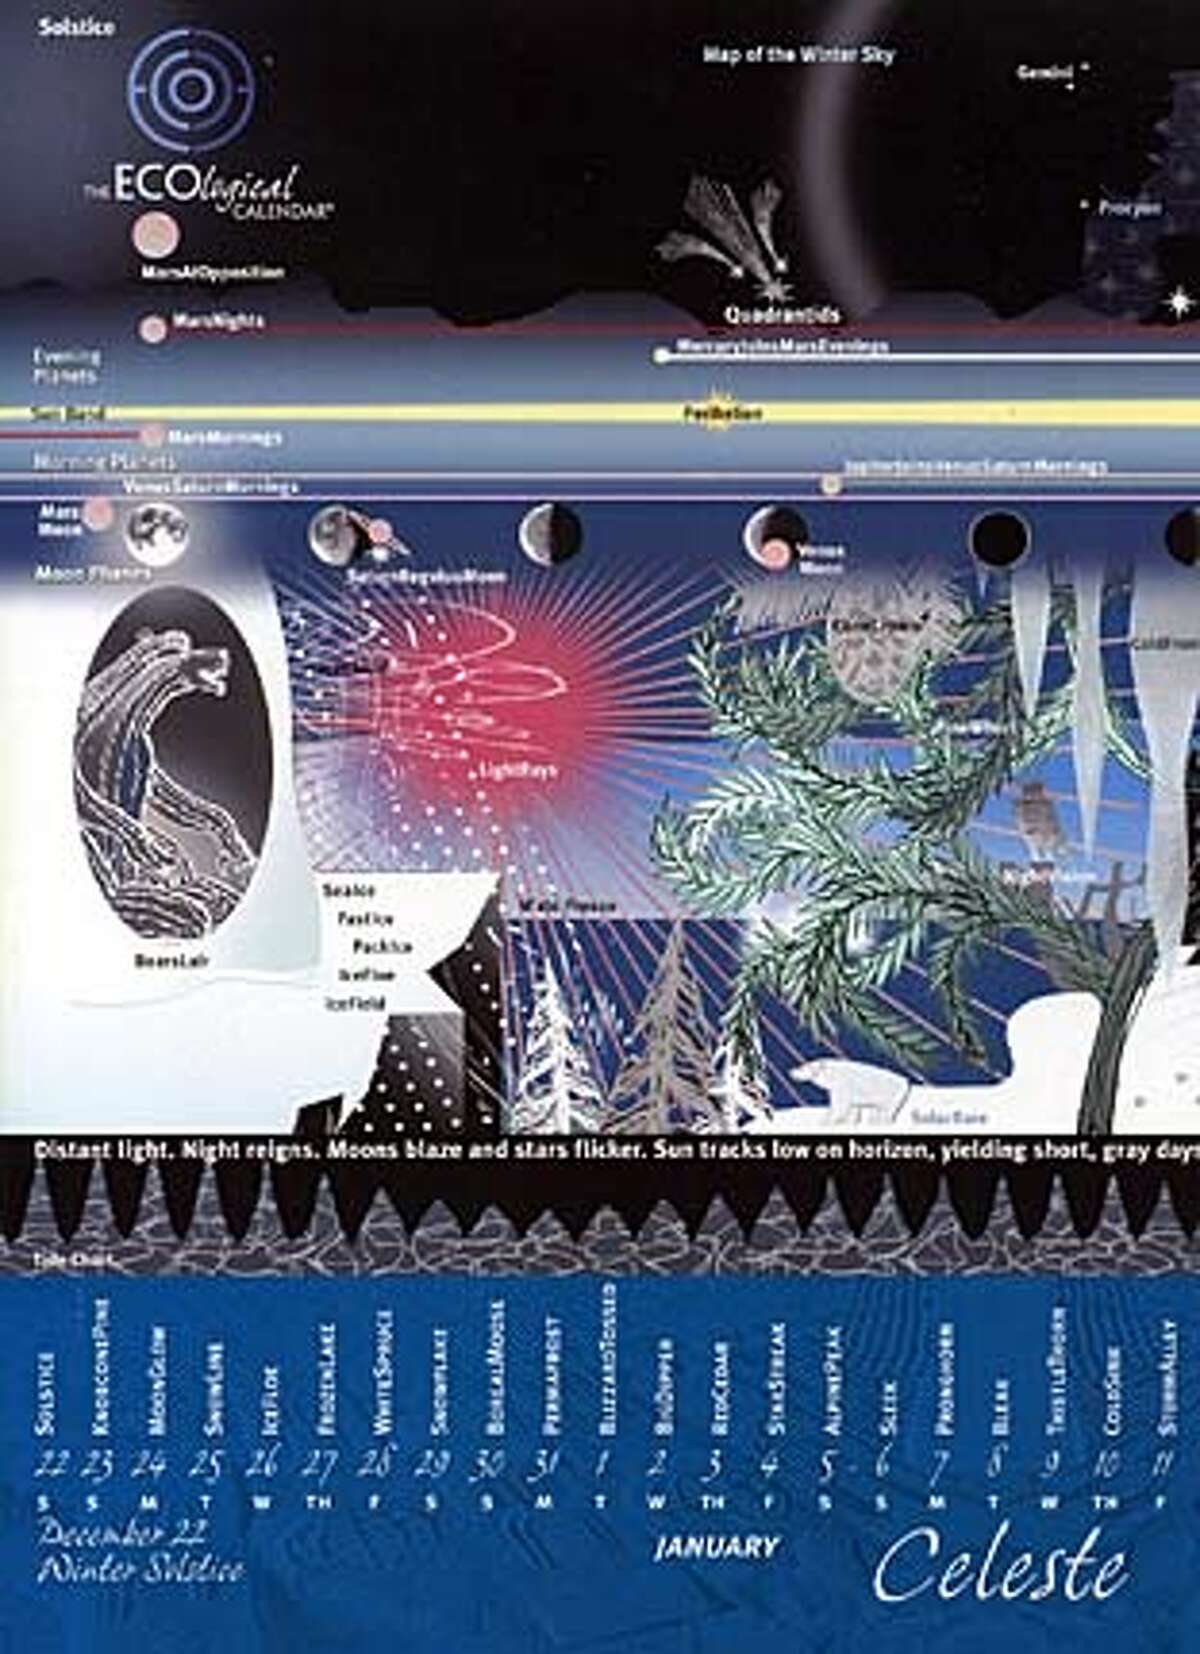 ECOlogical calendar tracks the seasons, tides and heavens